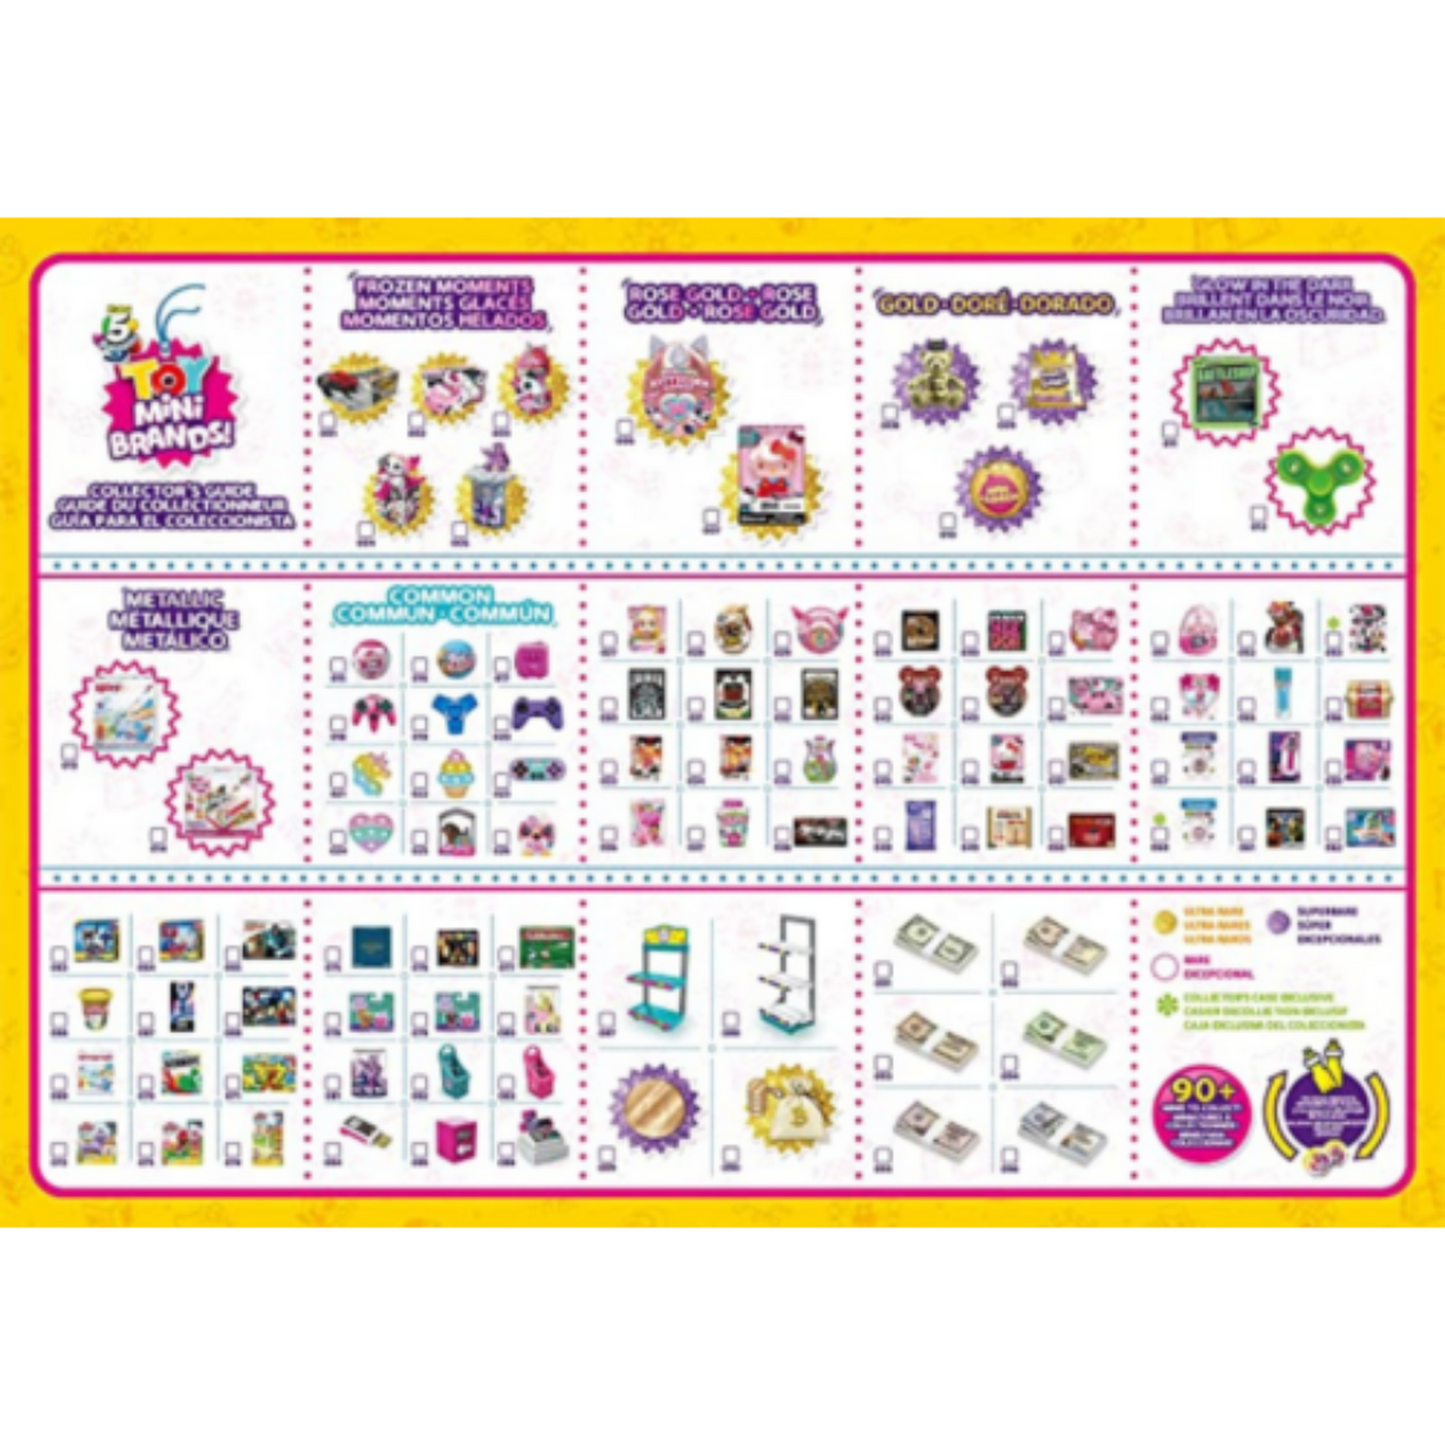 Toy Mini Brands Serie 3